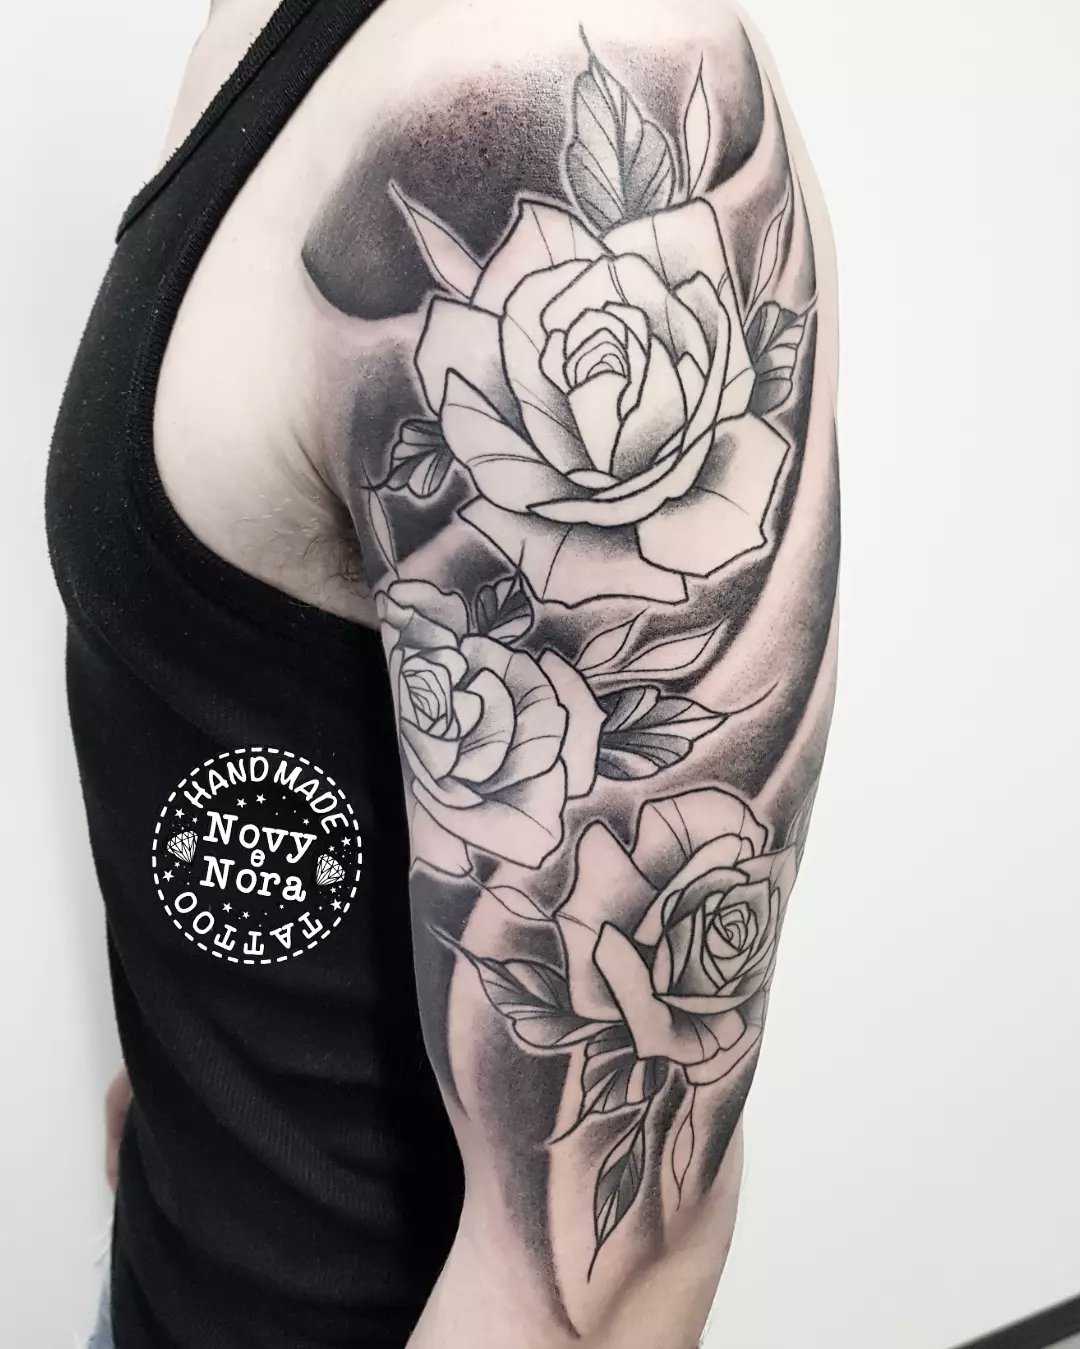 Negative rose tattoo by Michael Stade mikestatuering on Instagram  r tattoo